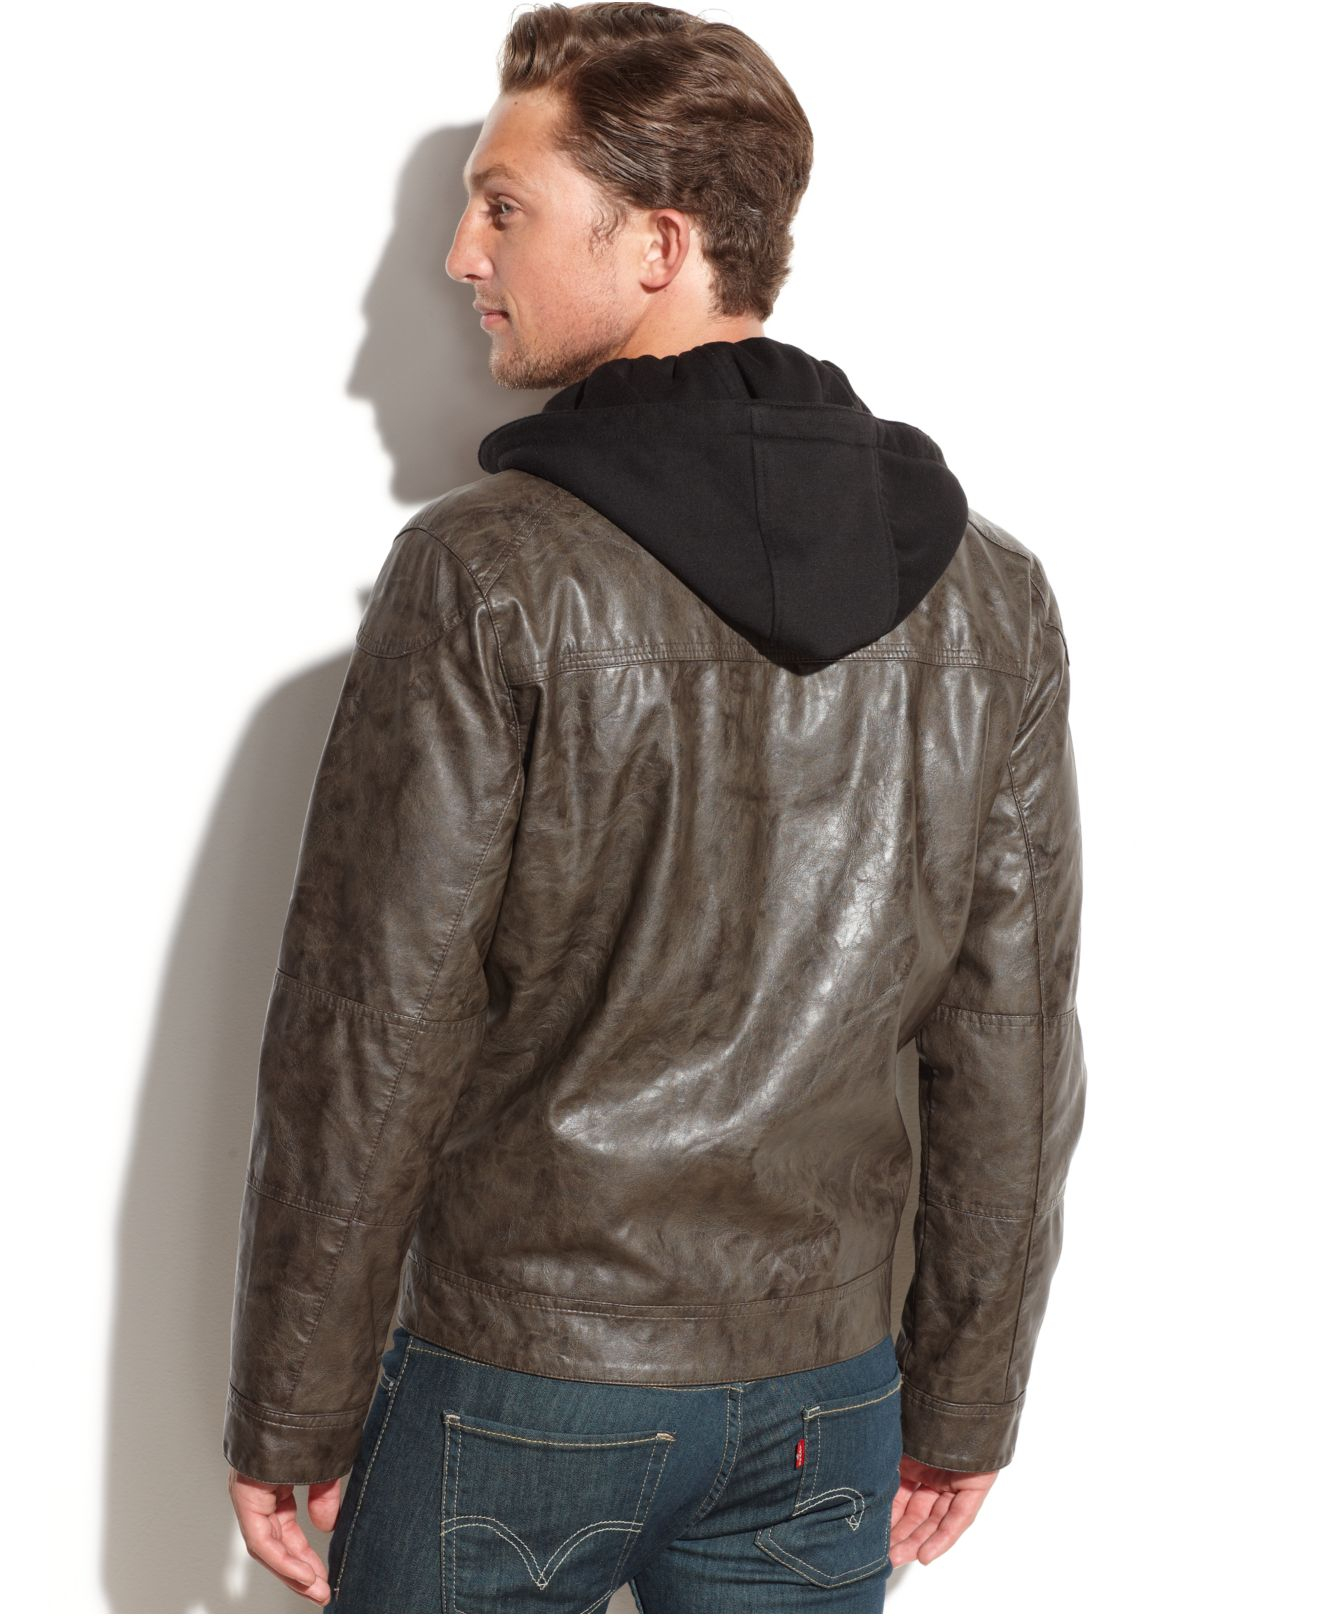 Lyst Calvin klein Hooded Faux Leather Moto Jacket in